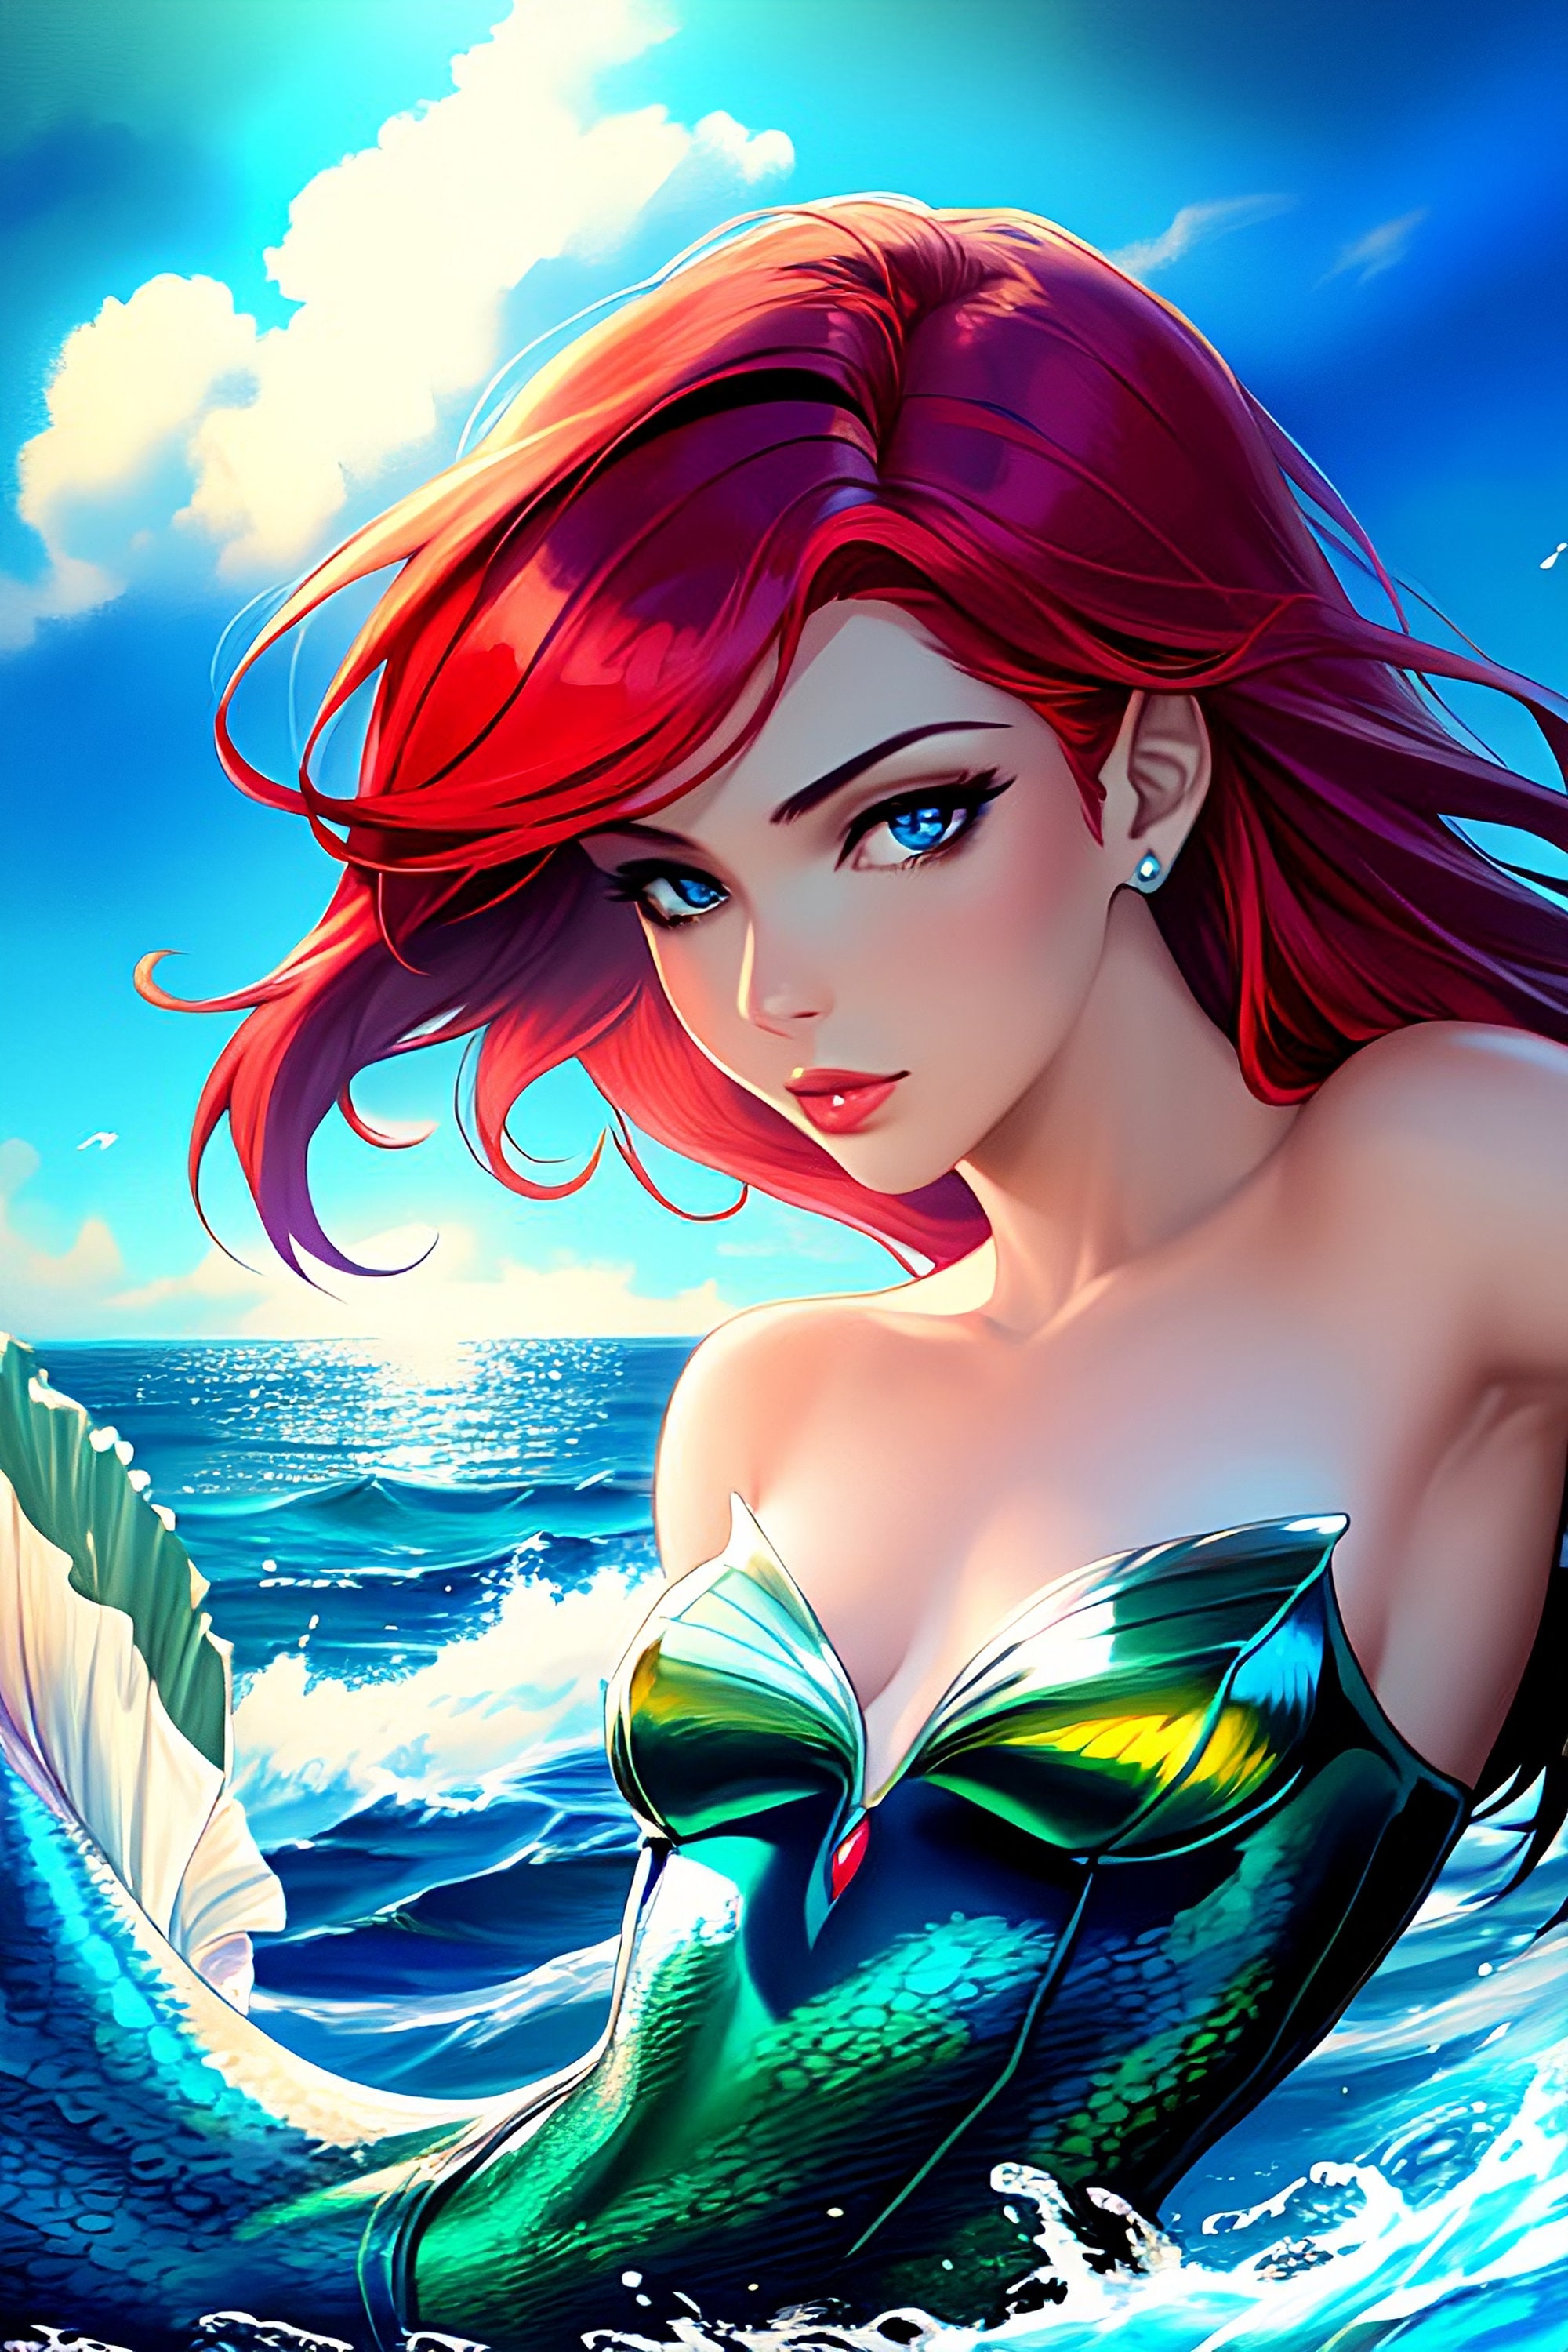 Little Mermaids Ariel cartoon fantasy Hd Wallpaper for Desktop   Wallpapers13com